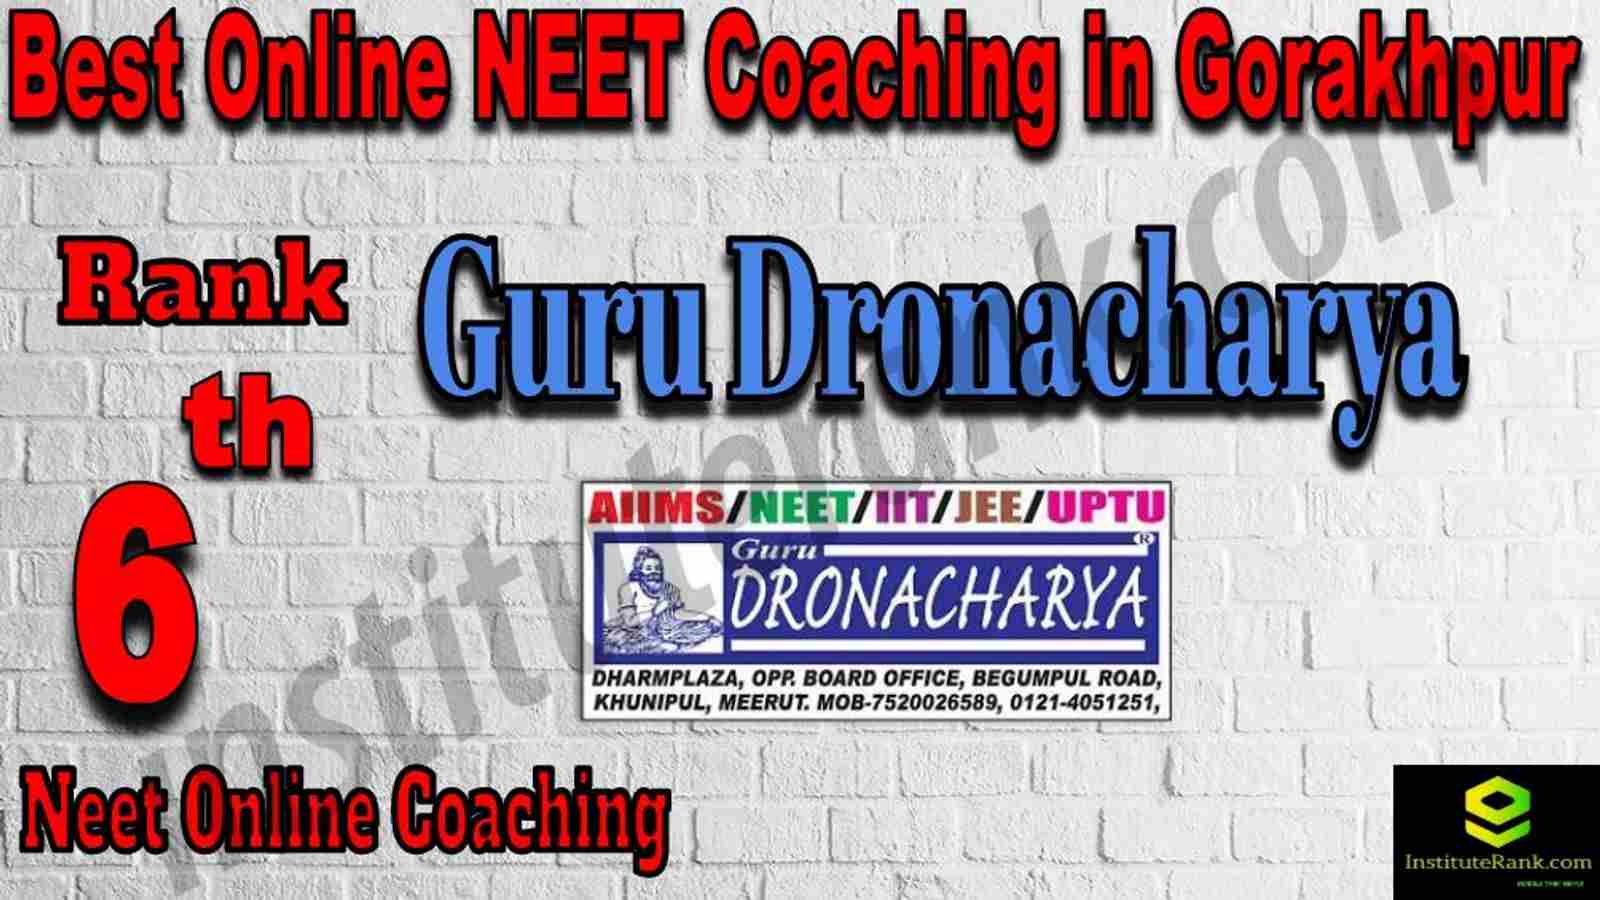 6th Best Online Neet Coaching in Gorakhpur